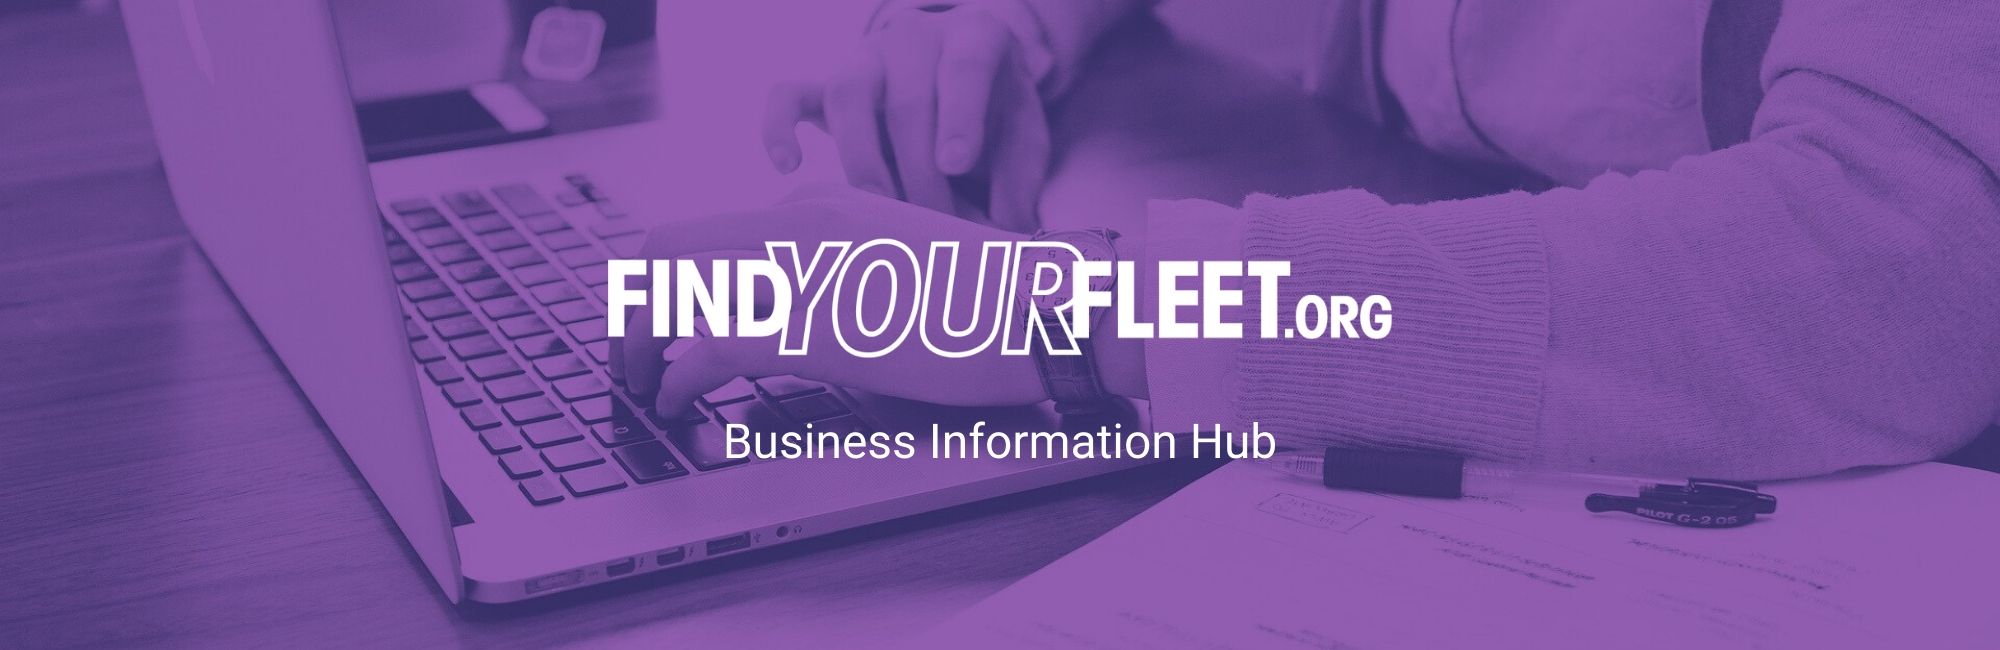 Fleet Business Information Hub